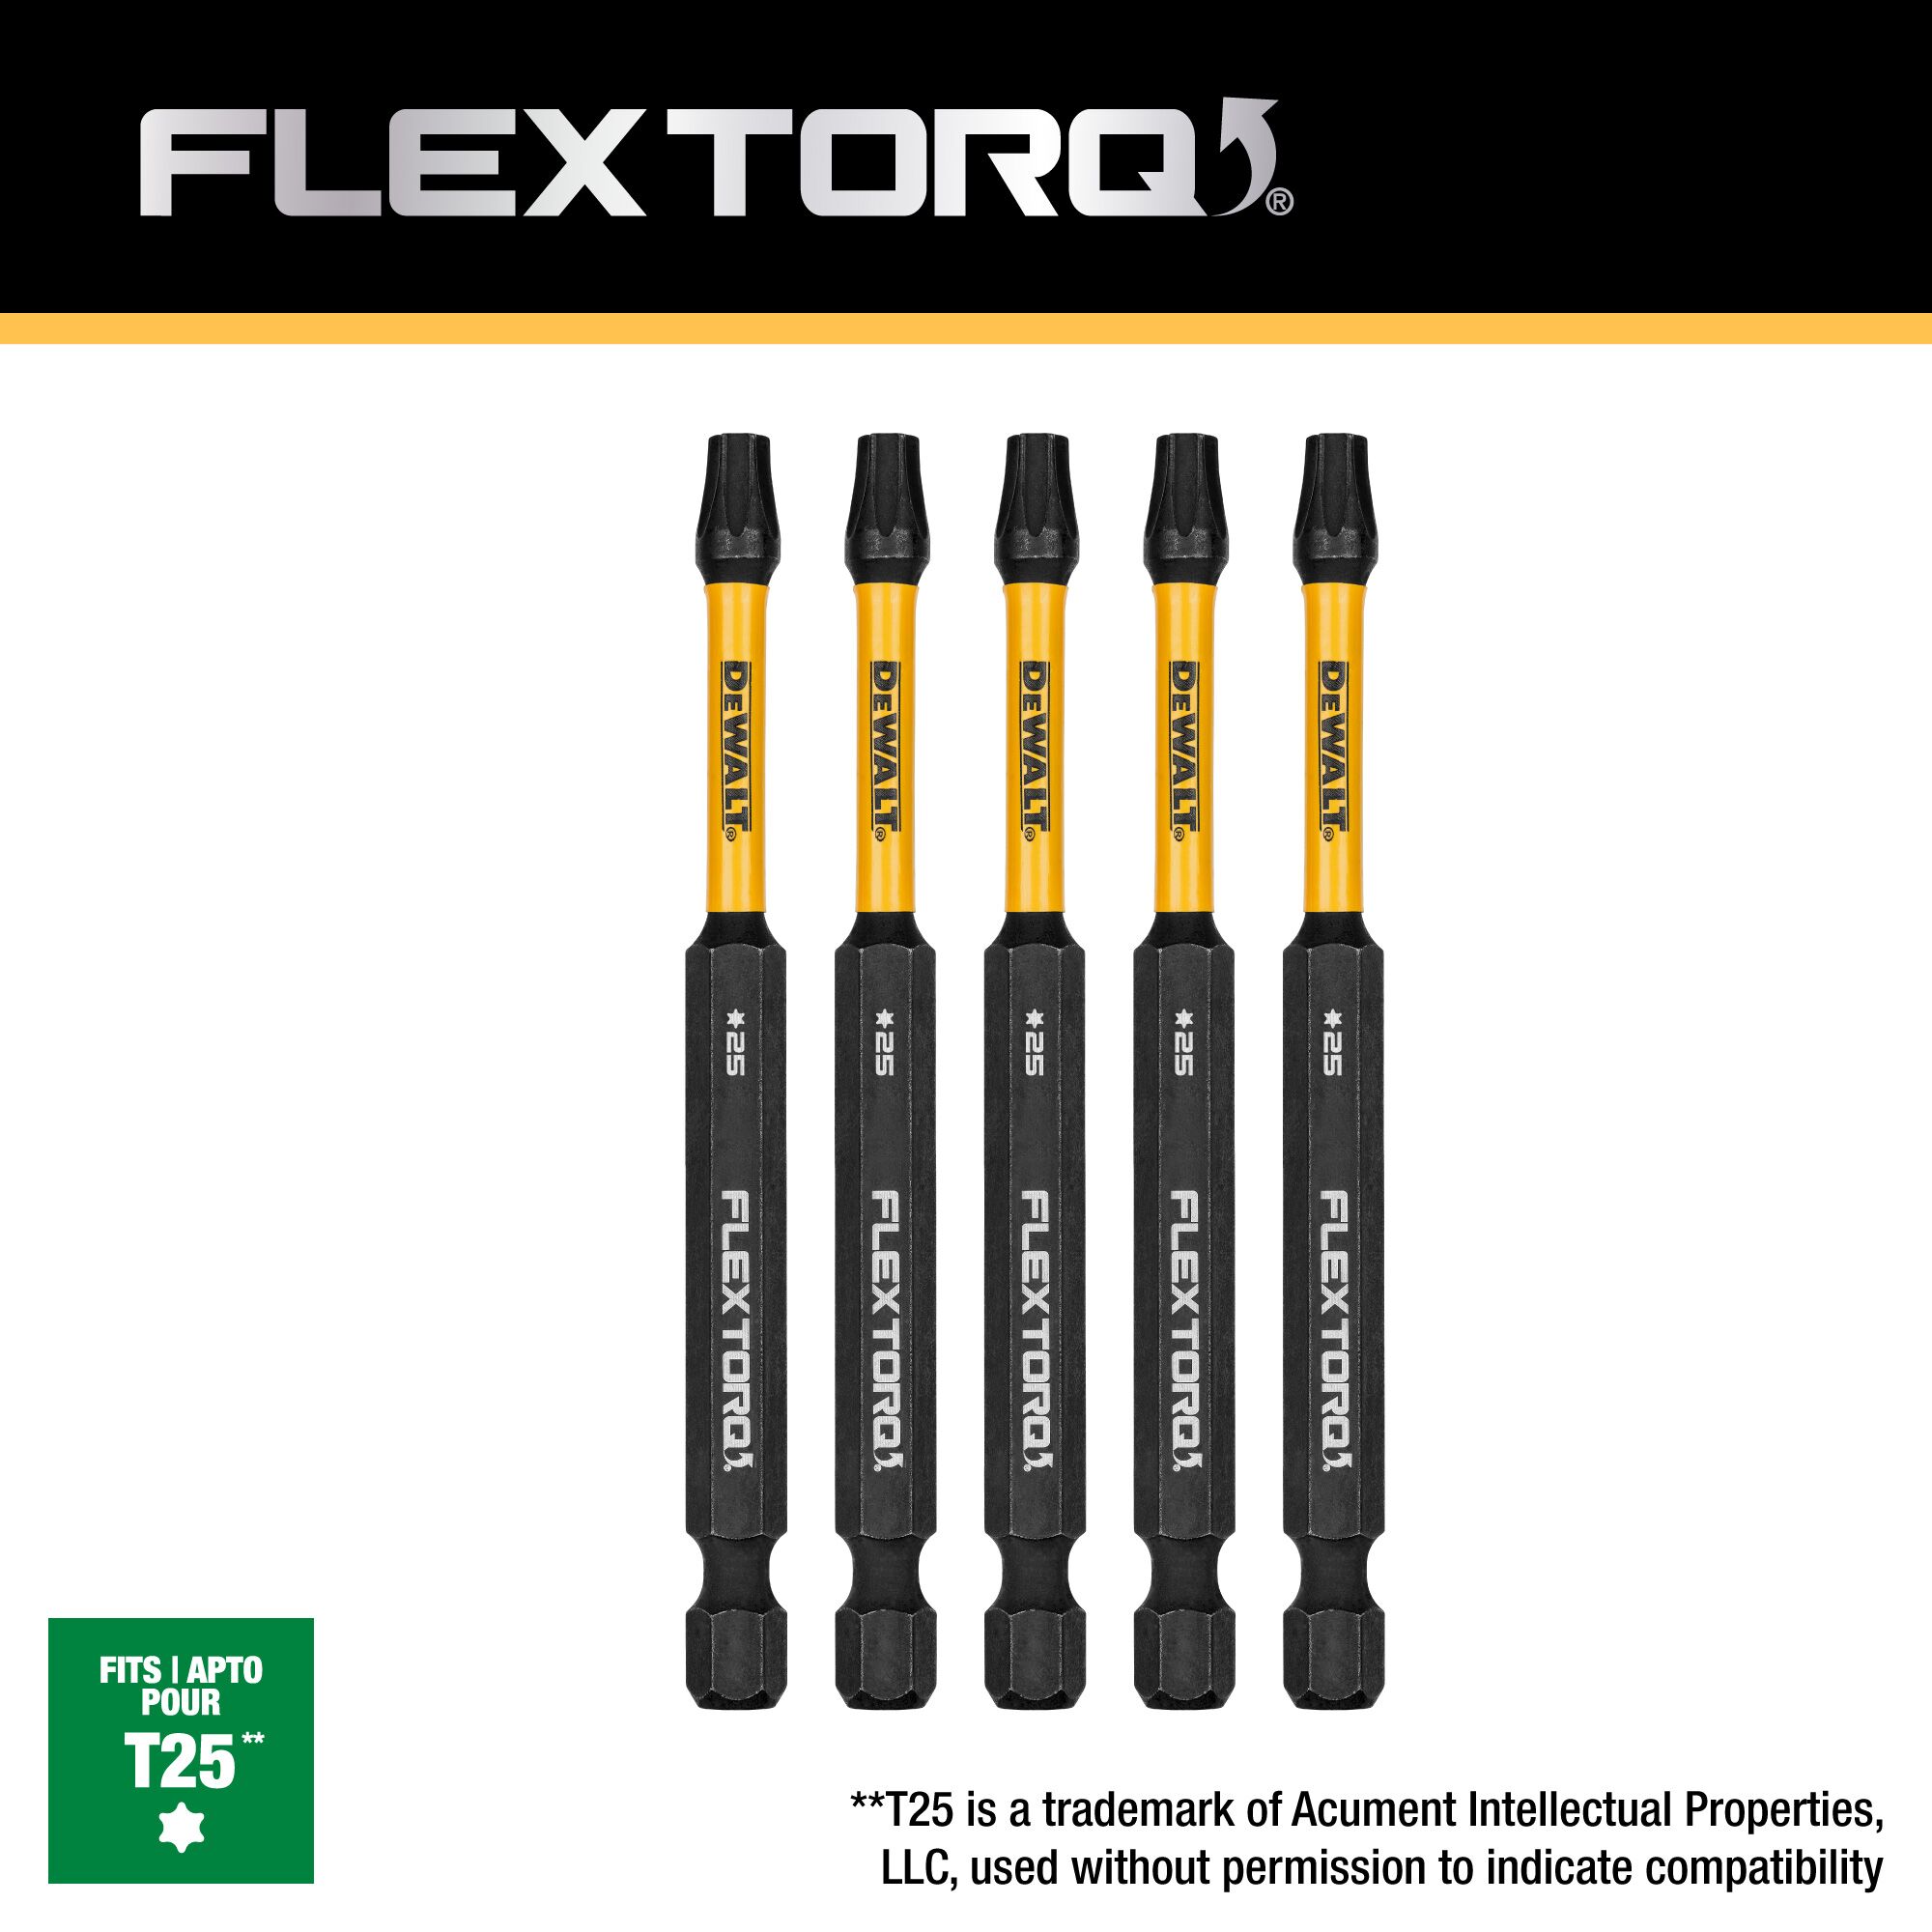 DEWALT Flextorq 1/4-in x 3-1/2-in Torx Impact Driver Bit in the